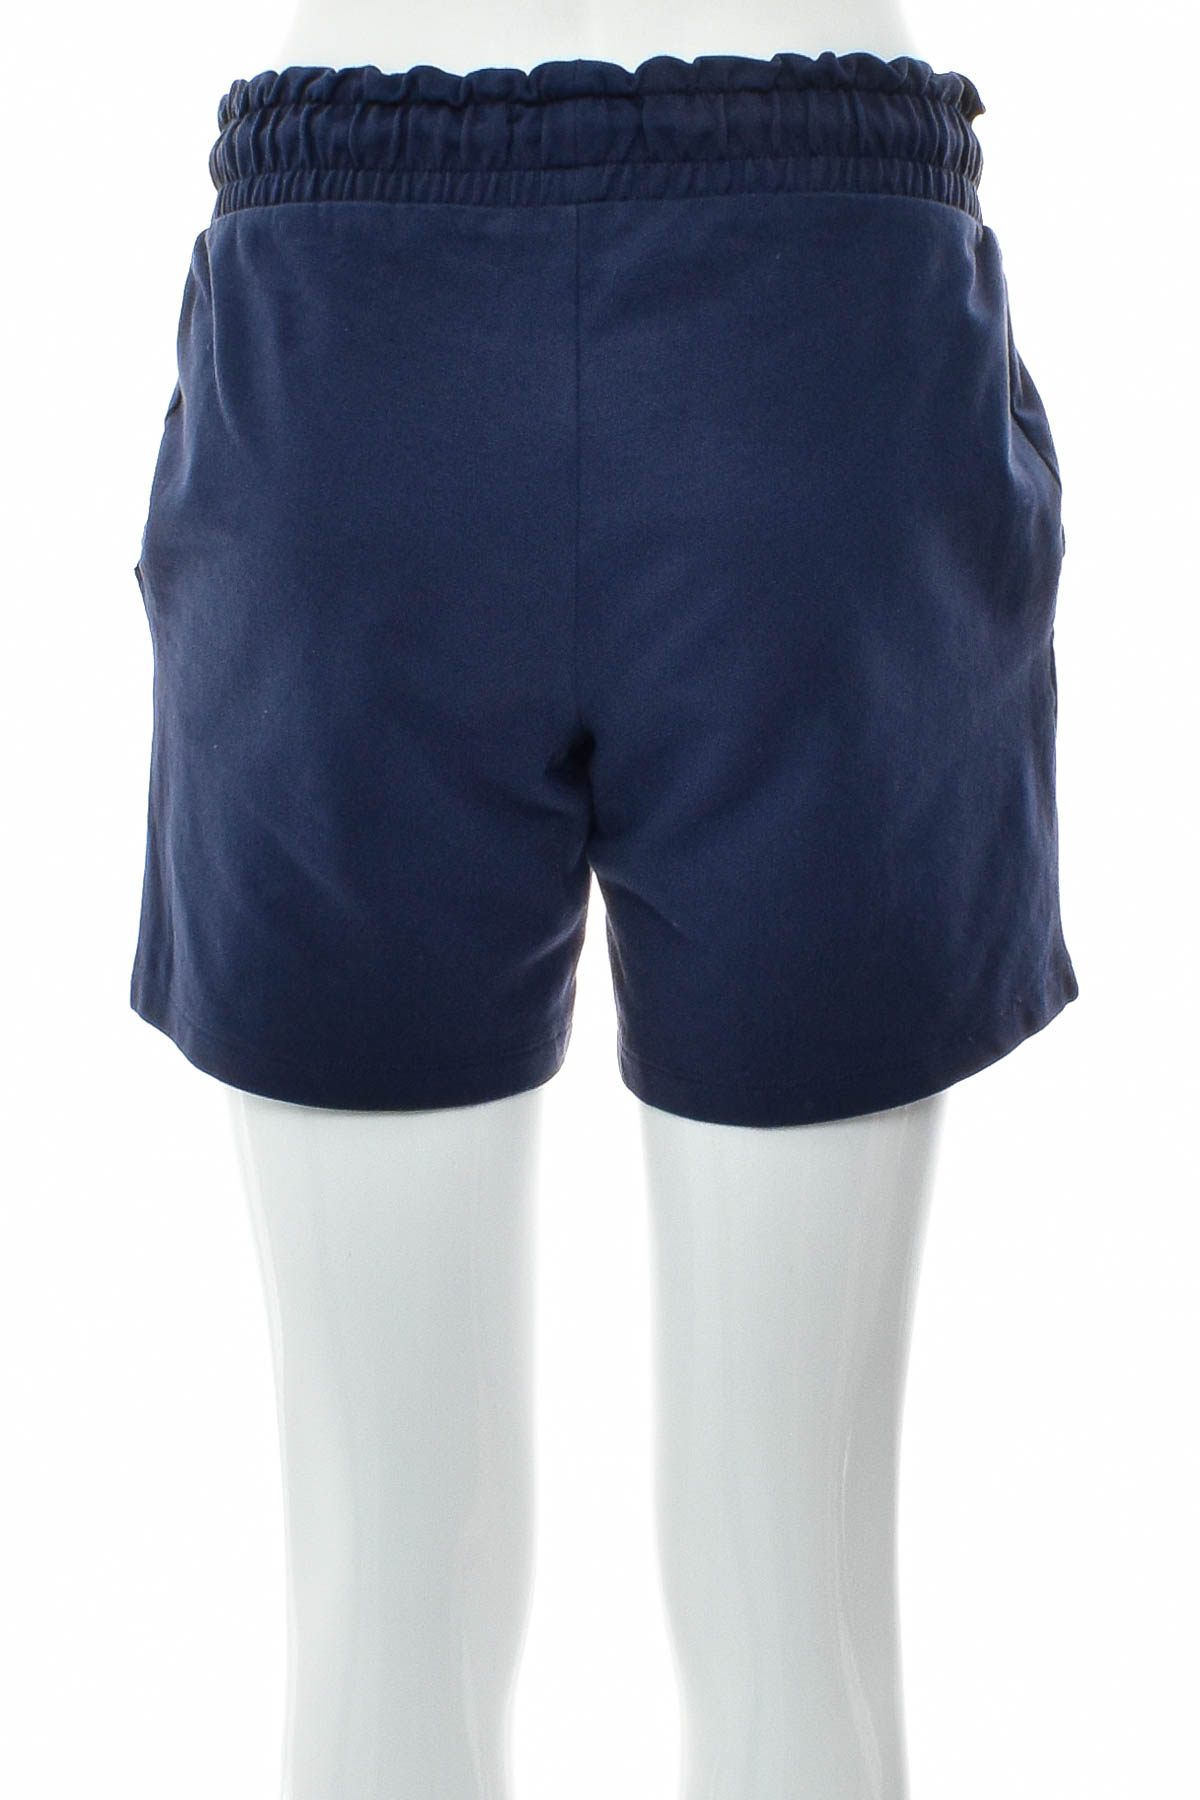 Female shorts - WOMEN essentials by Tchibo - 1